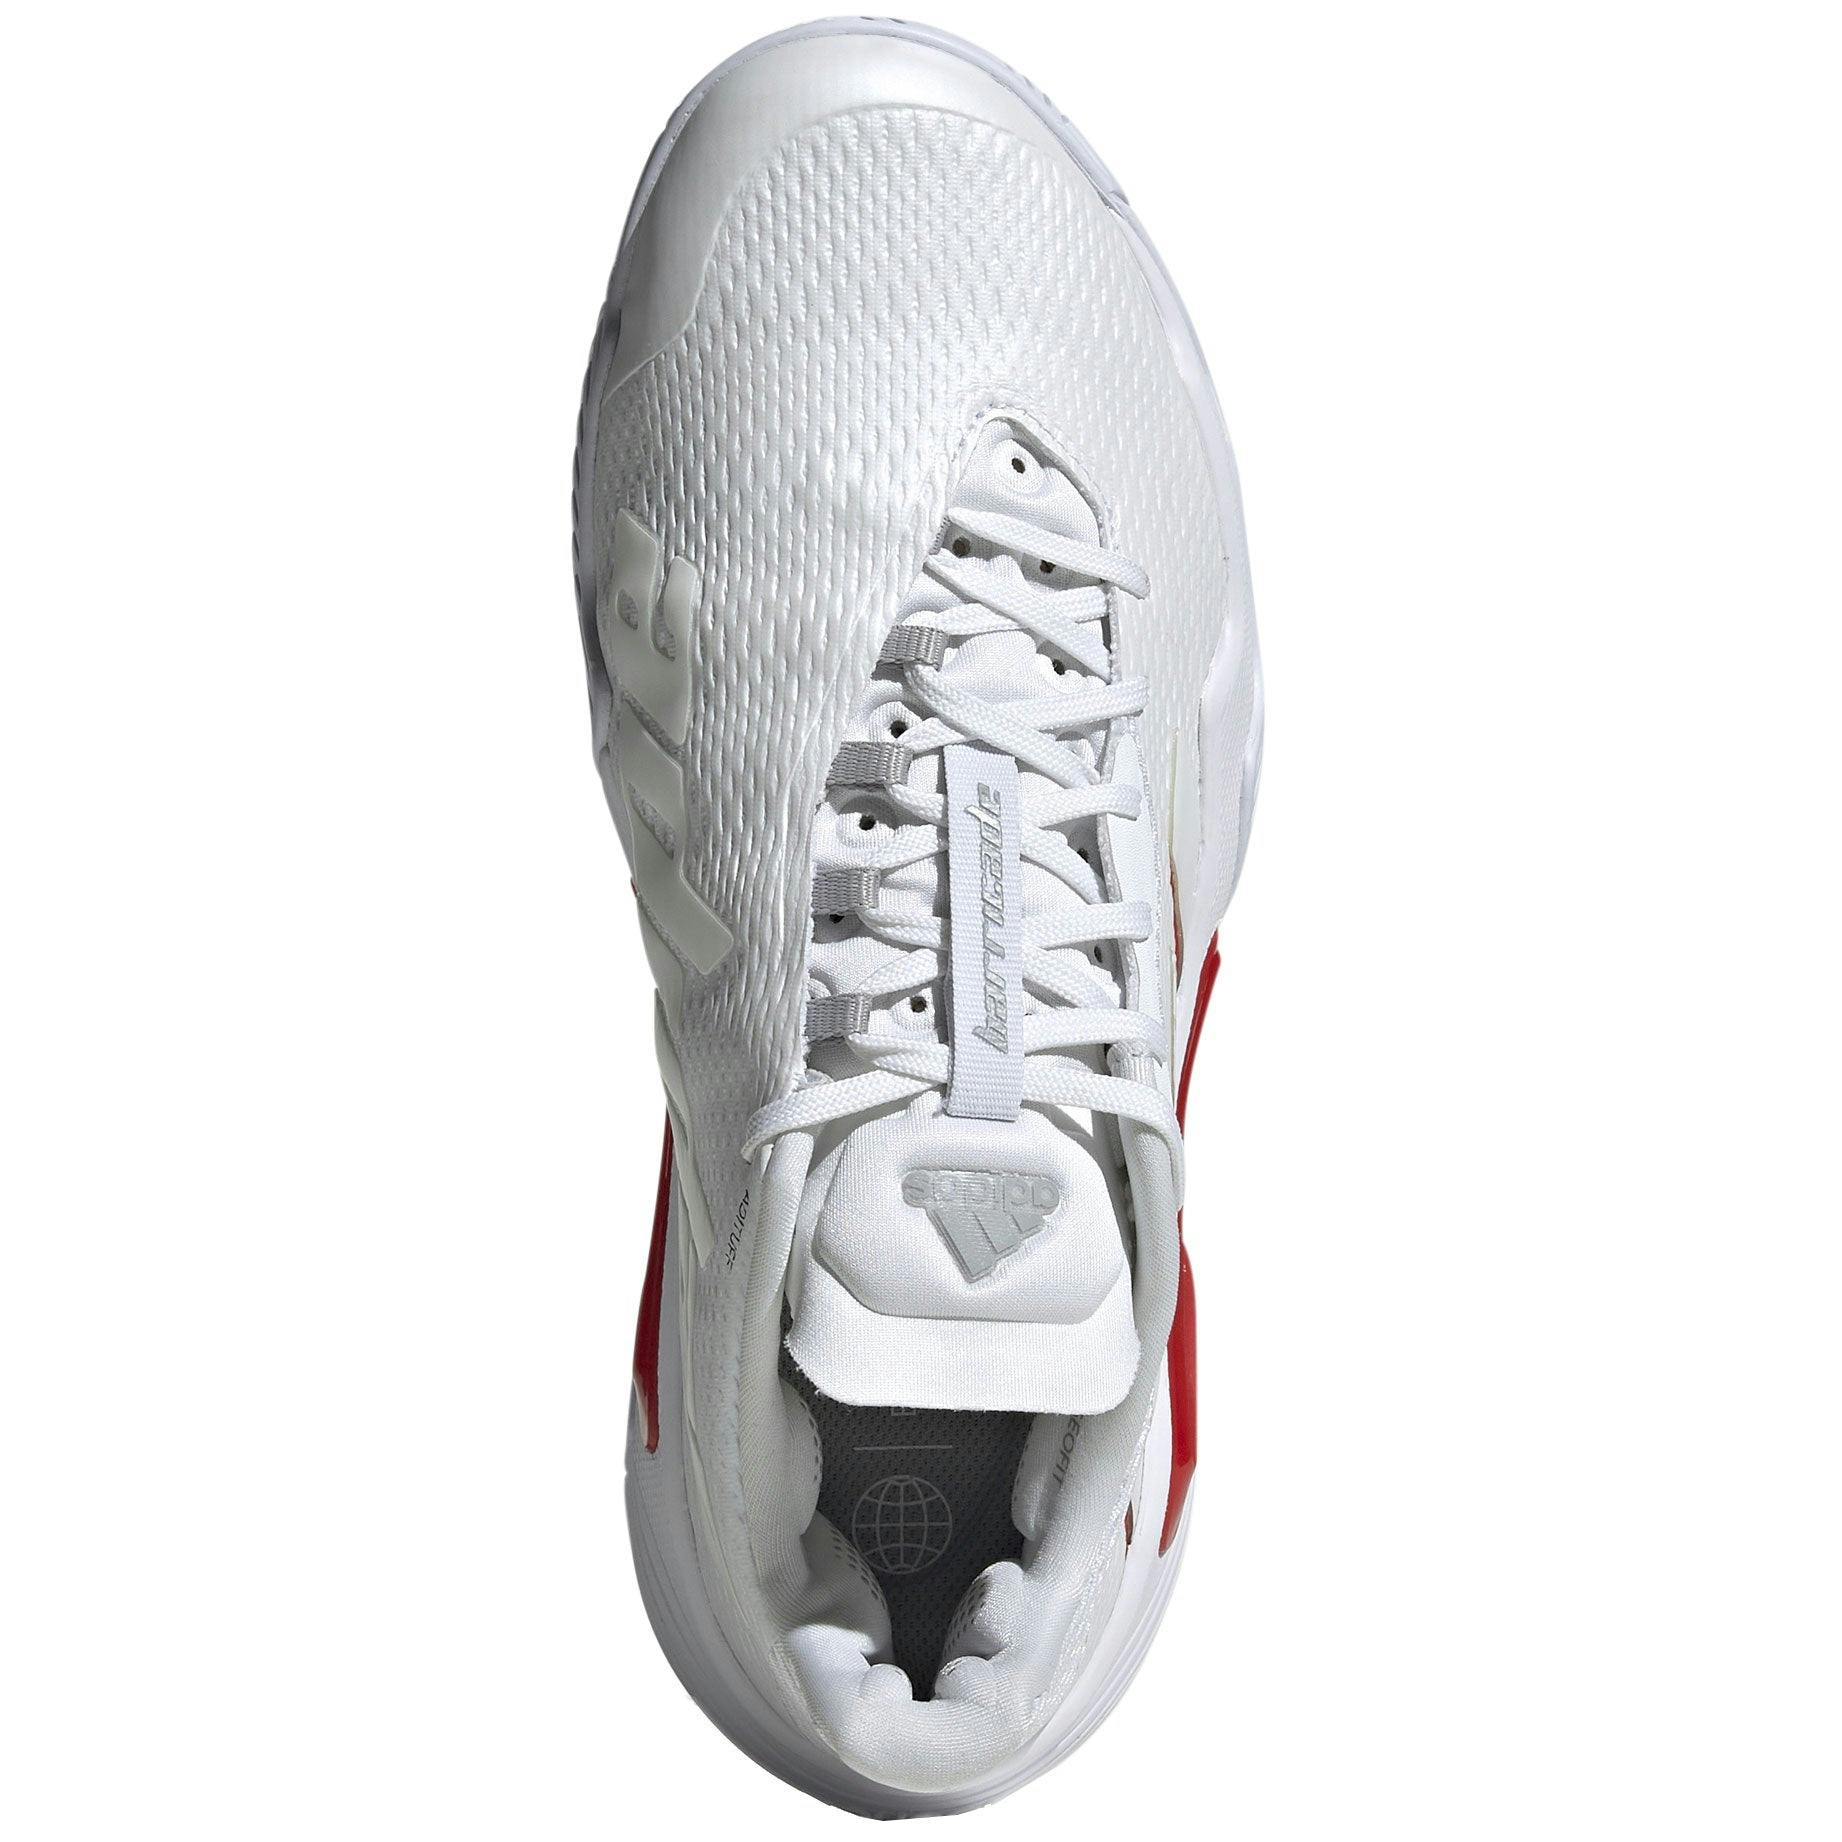 Adidas Barricade White-Silver Womens Tennis Shoes - WHT/SLVR/GY2 / B Medium / 7.0